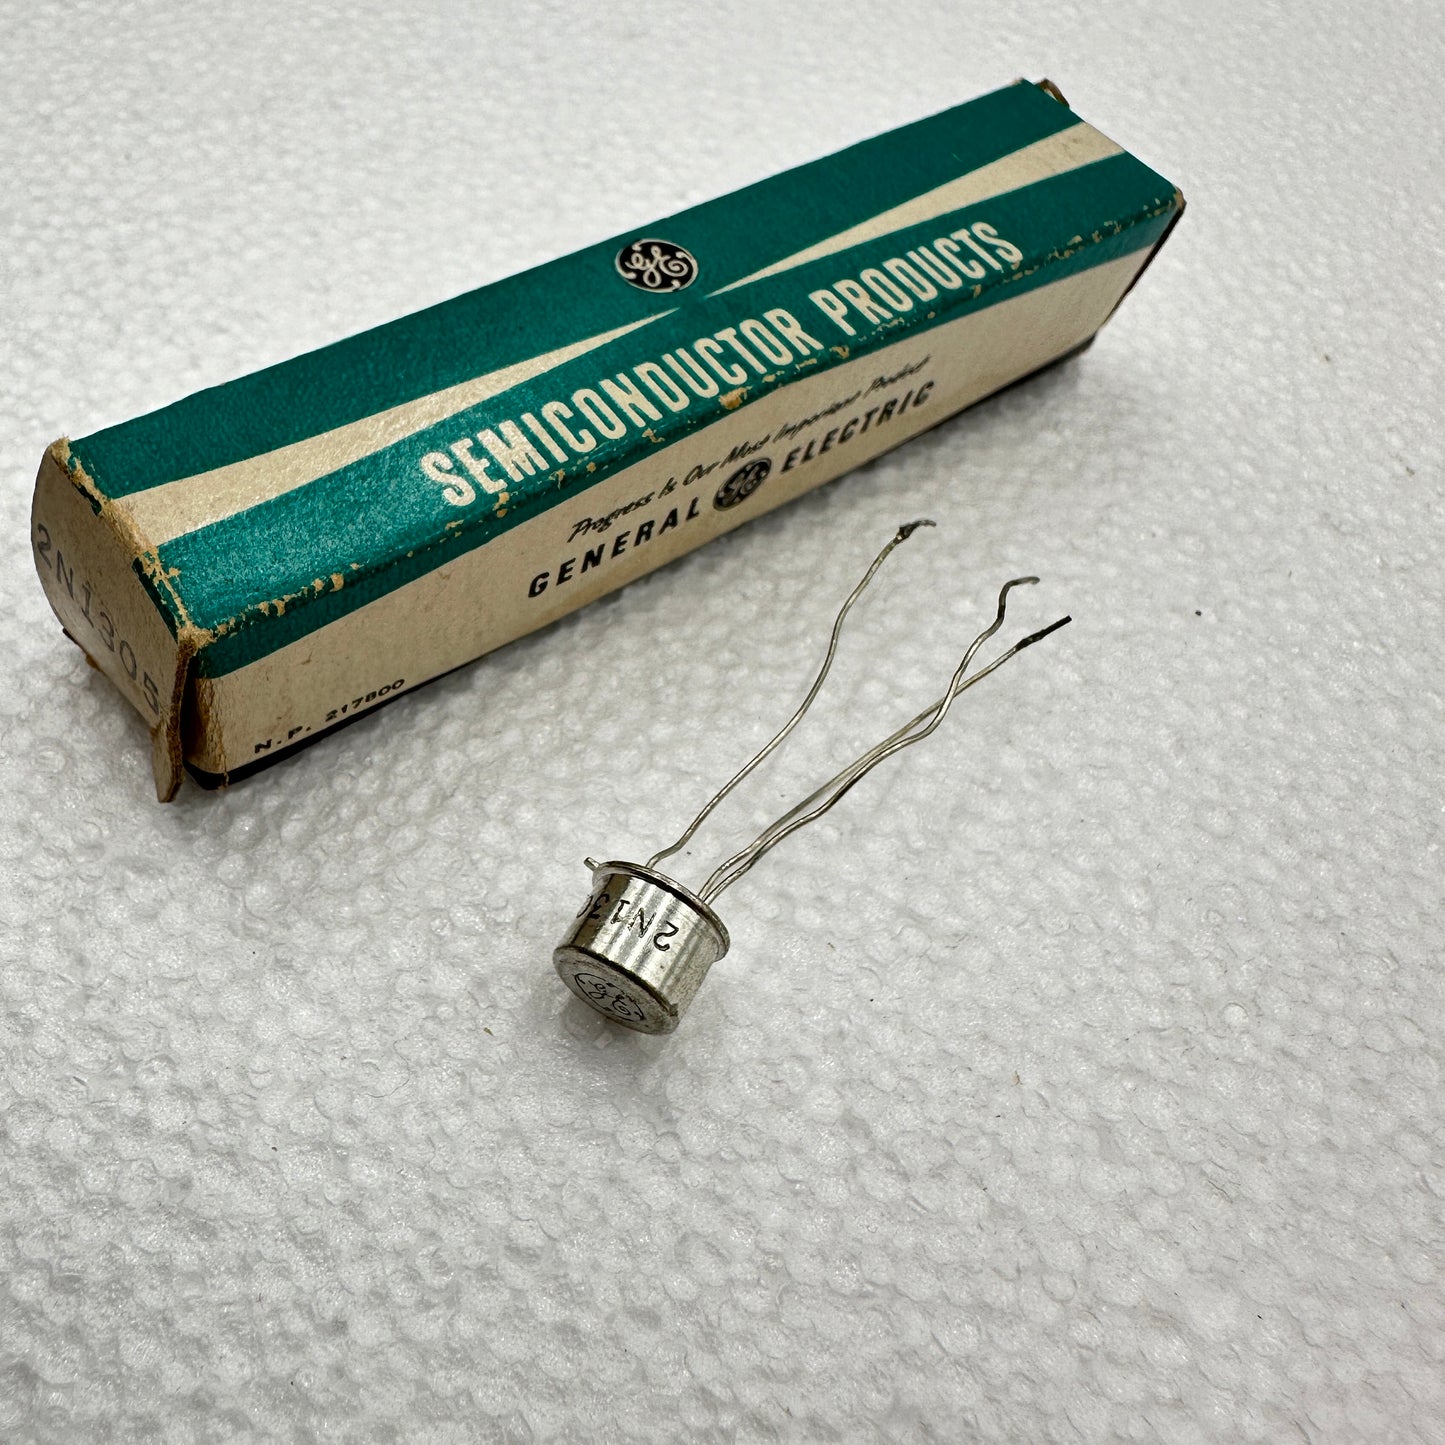 2N1305 Germanium Transistor NOS - Rare & Reclaimed